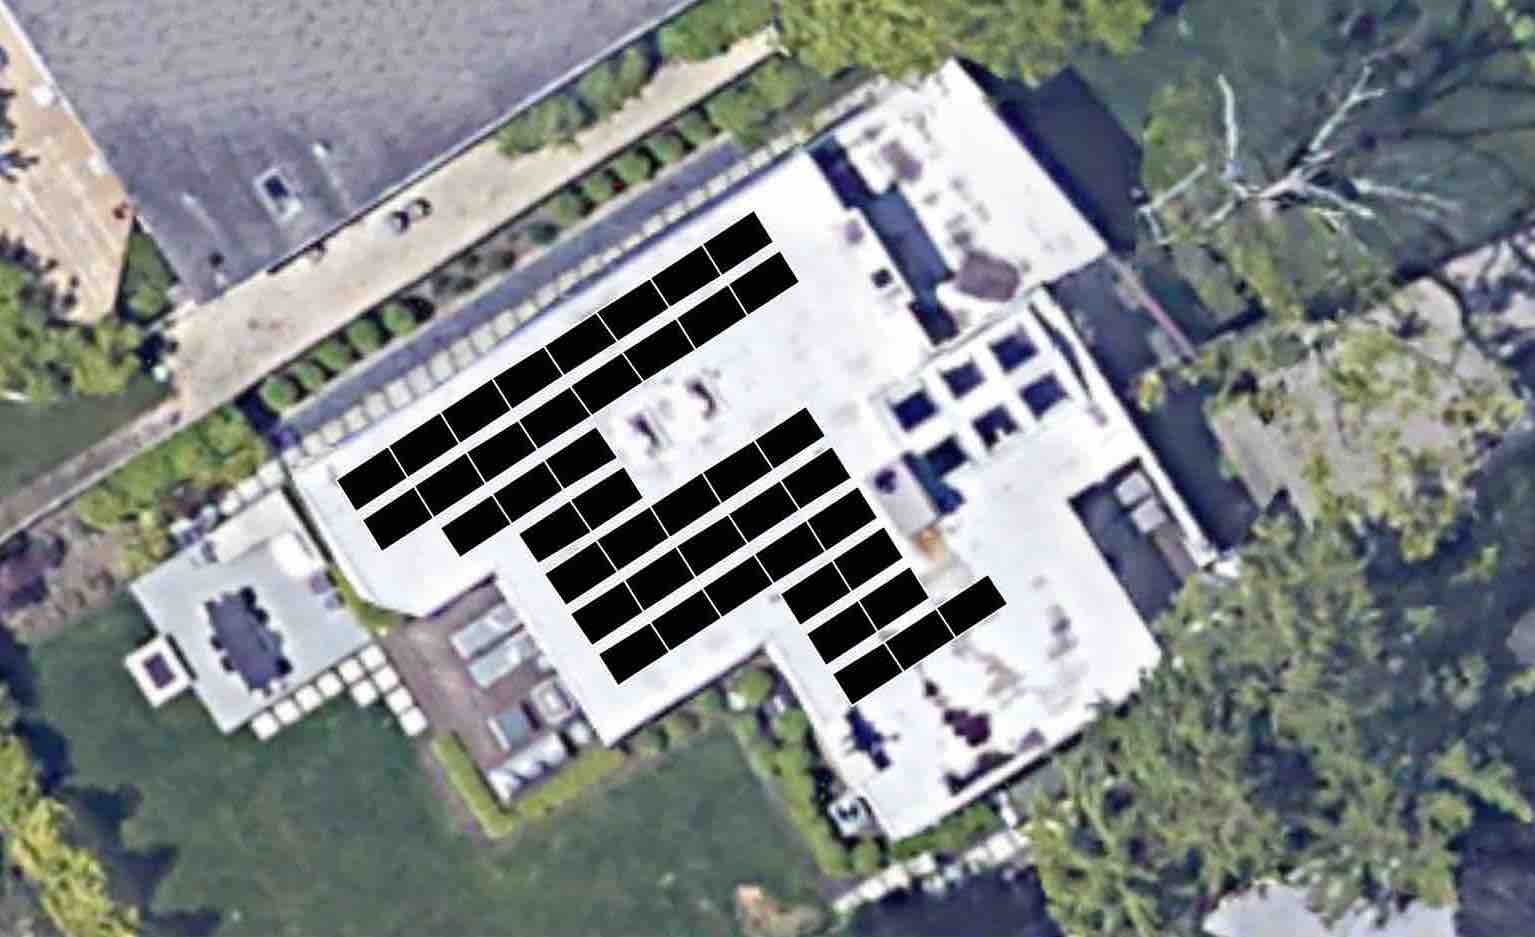 My proposed solar installation